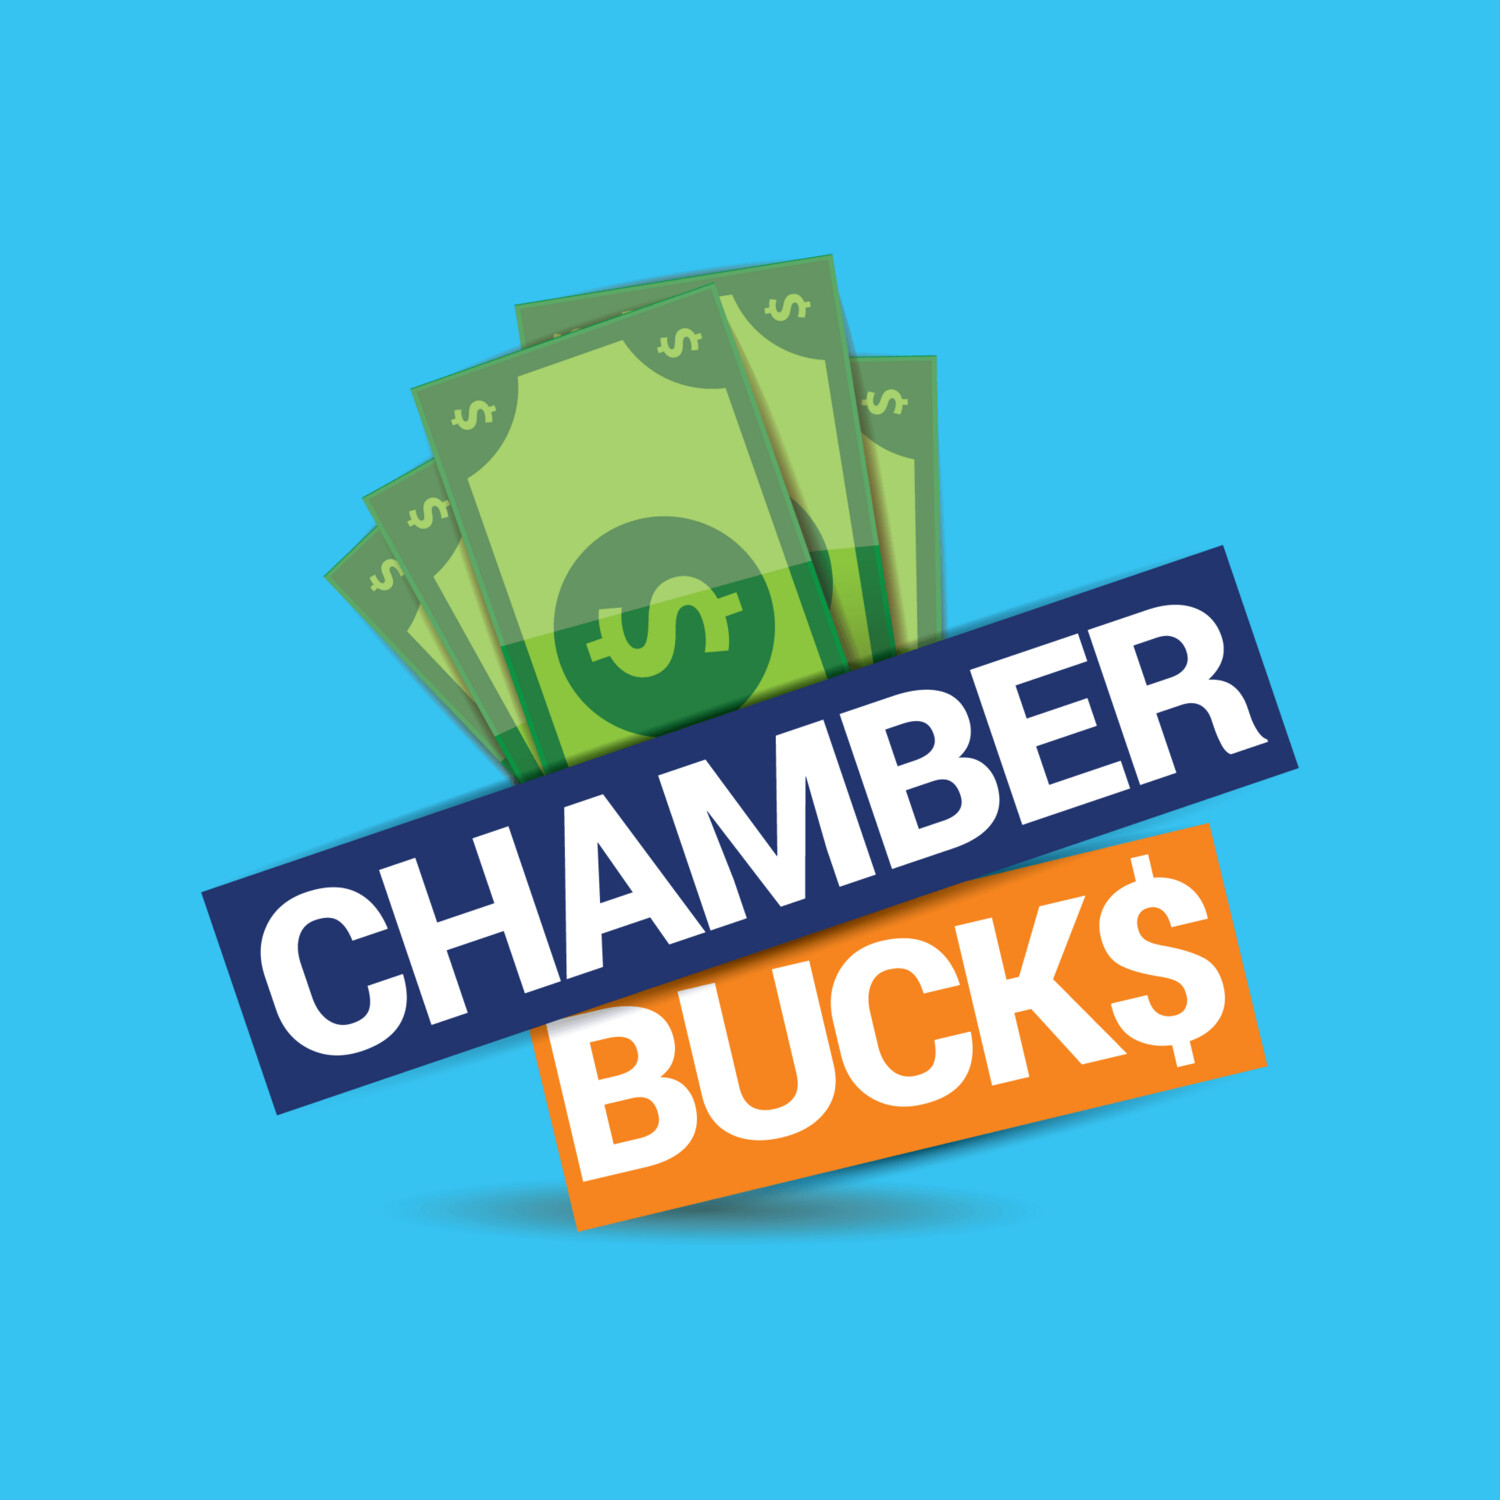 $25 Chamber Buck$